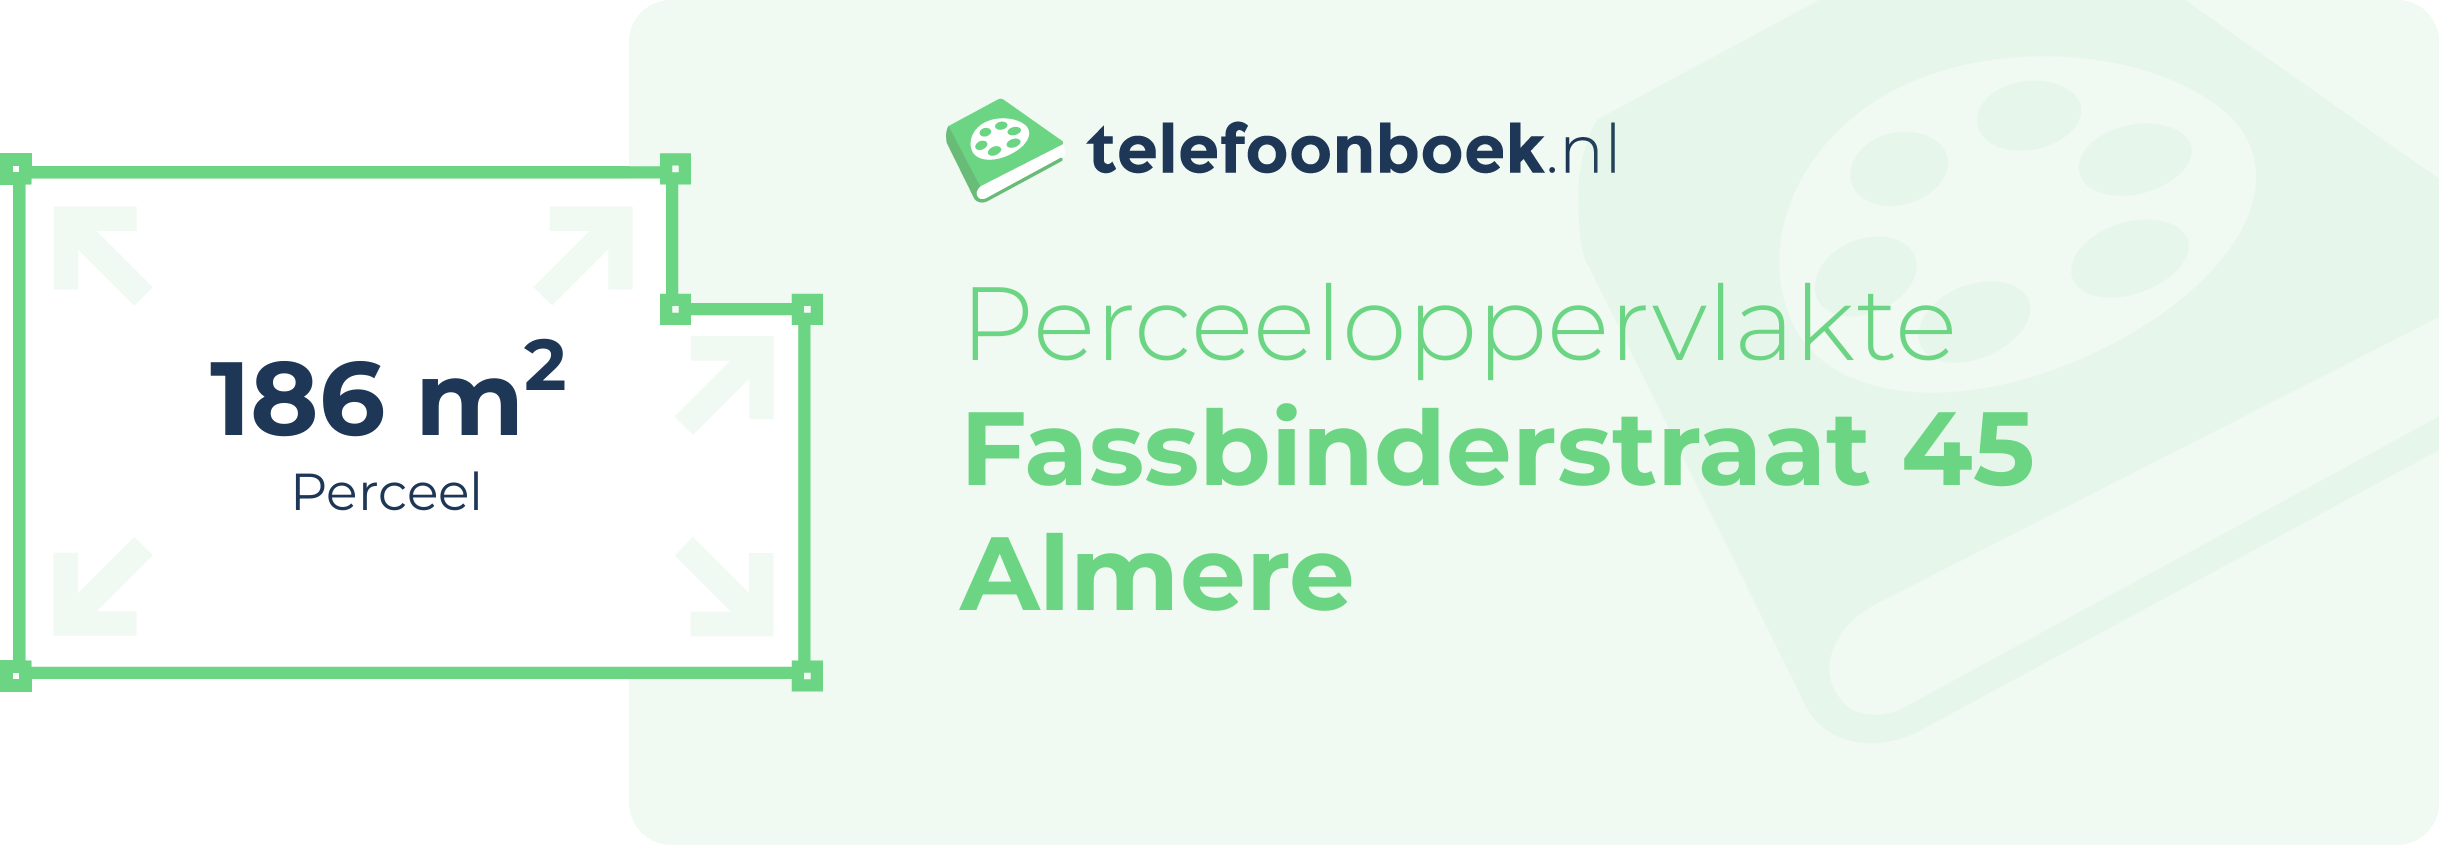 Perceeloppervlakte Fassbinderstraat 45 Almere